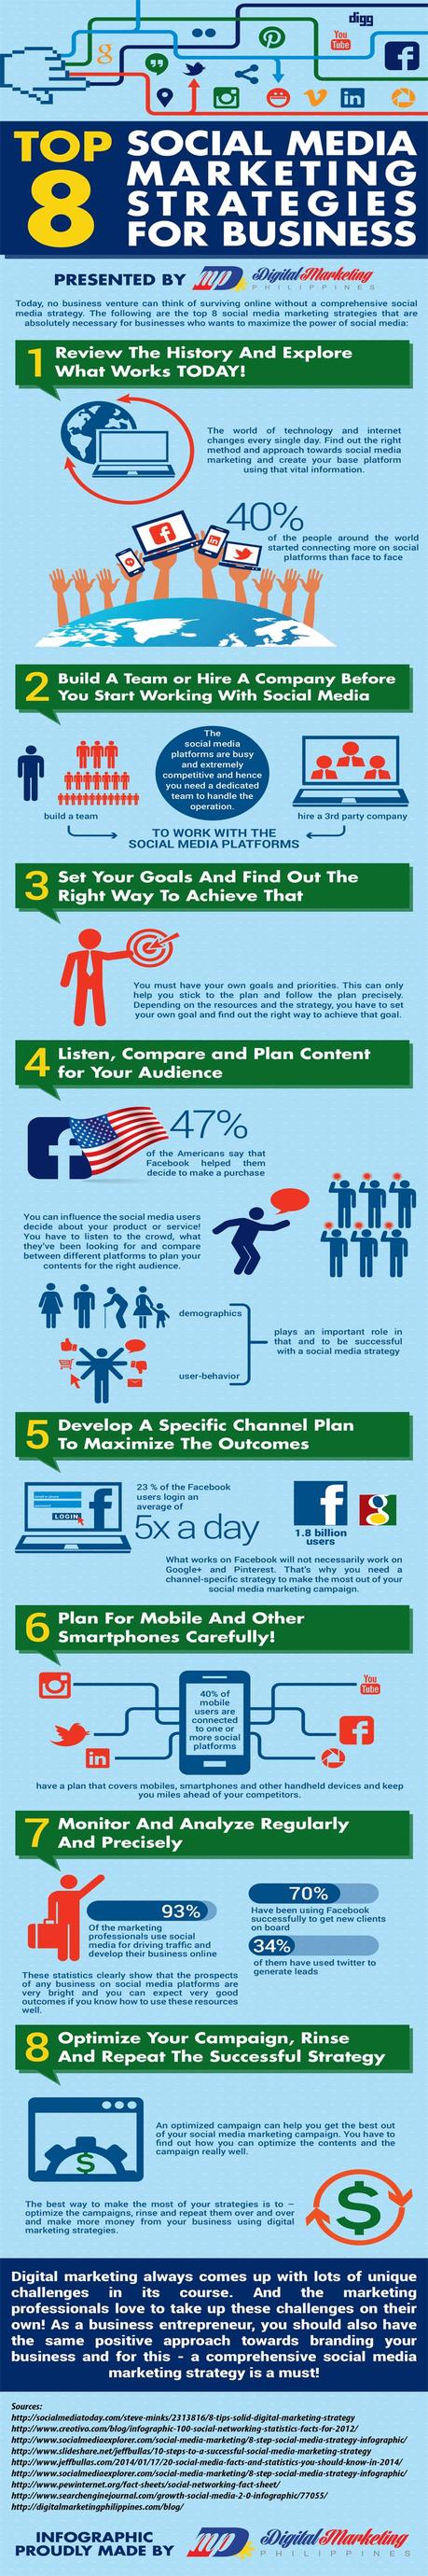 Top 8 Social Media Marketing Strategies for Business